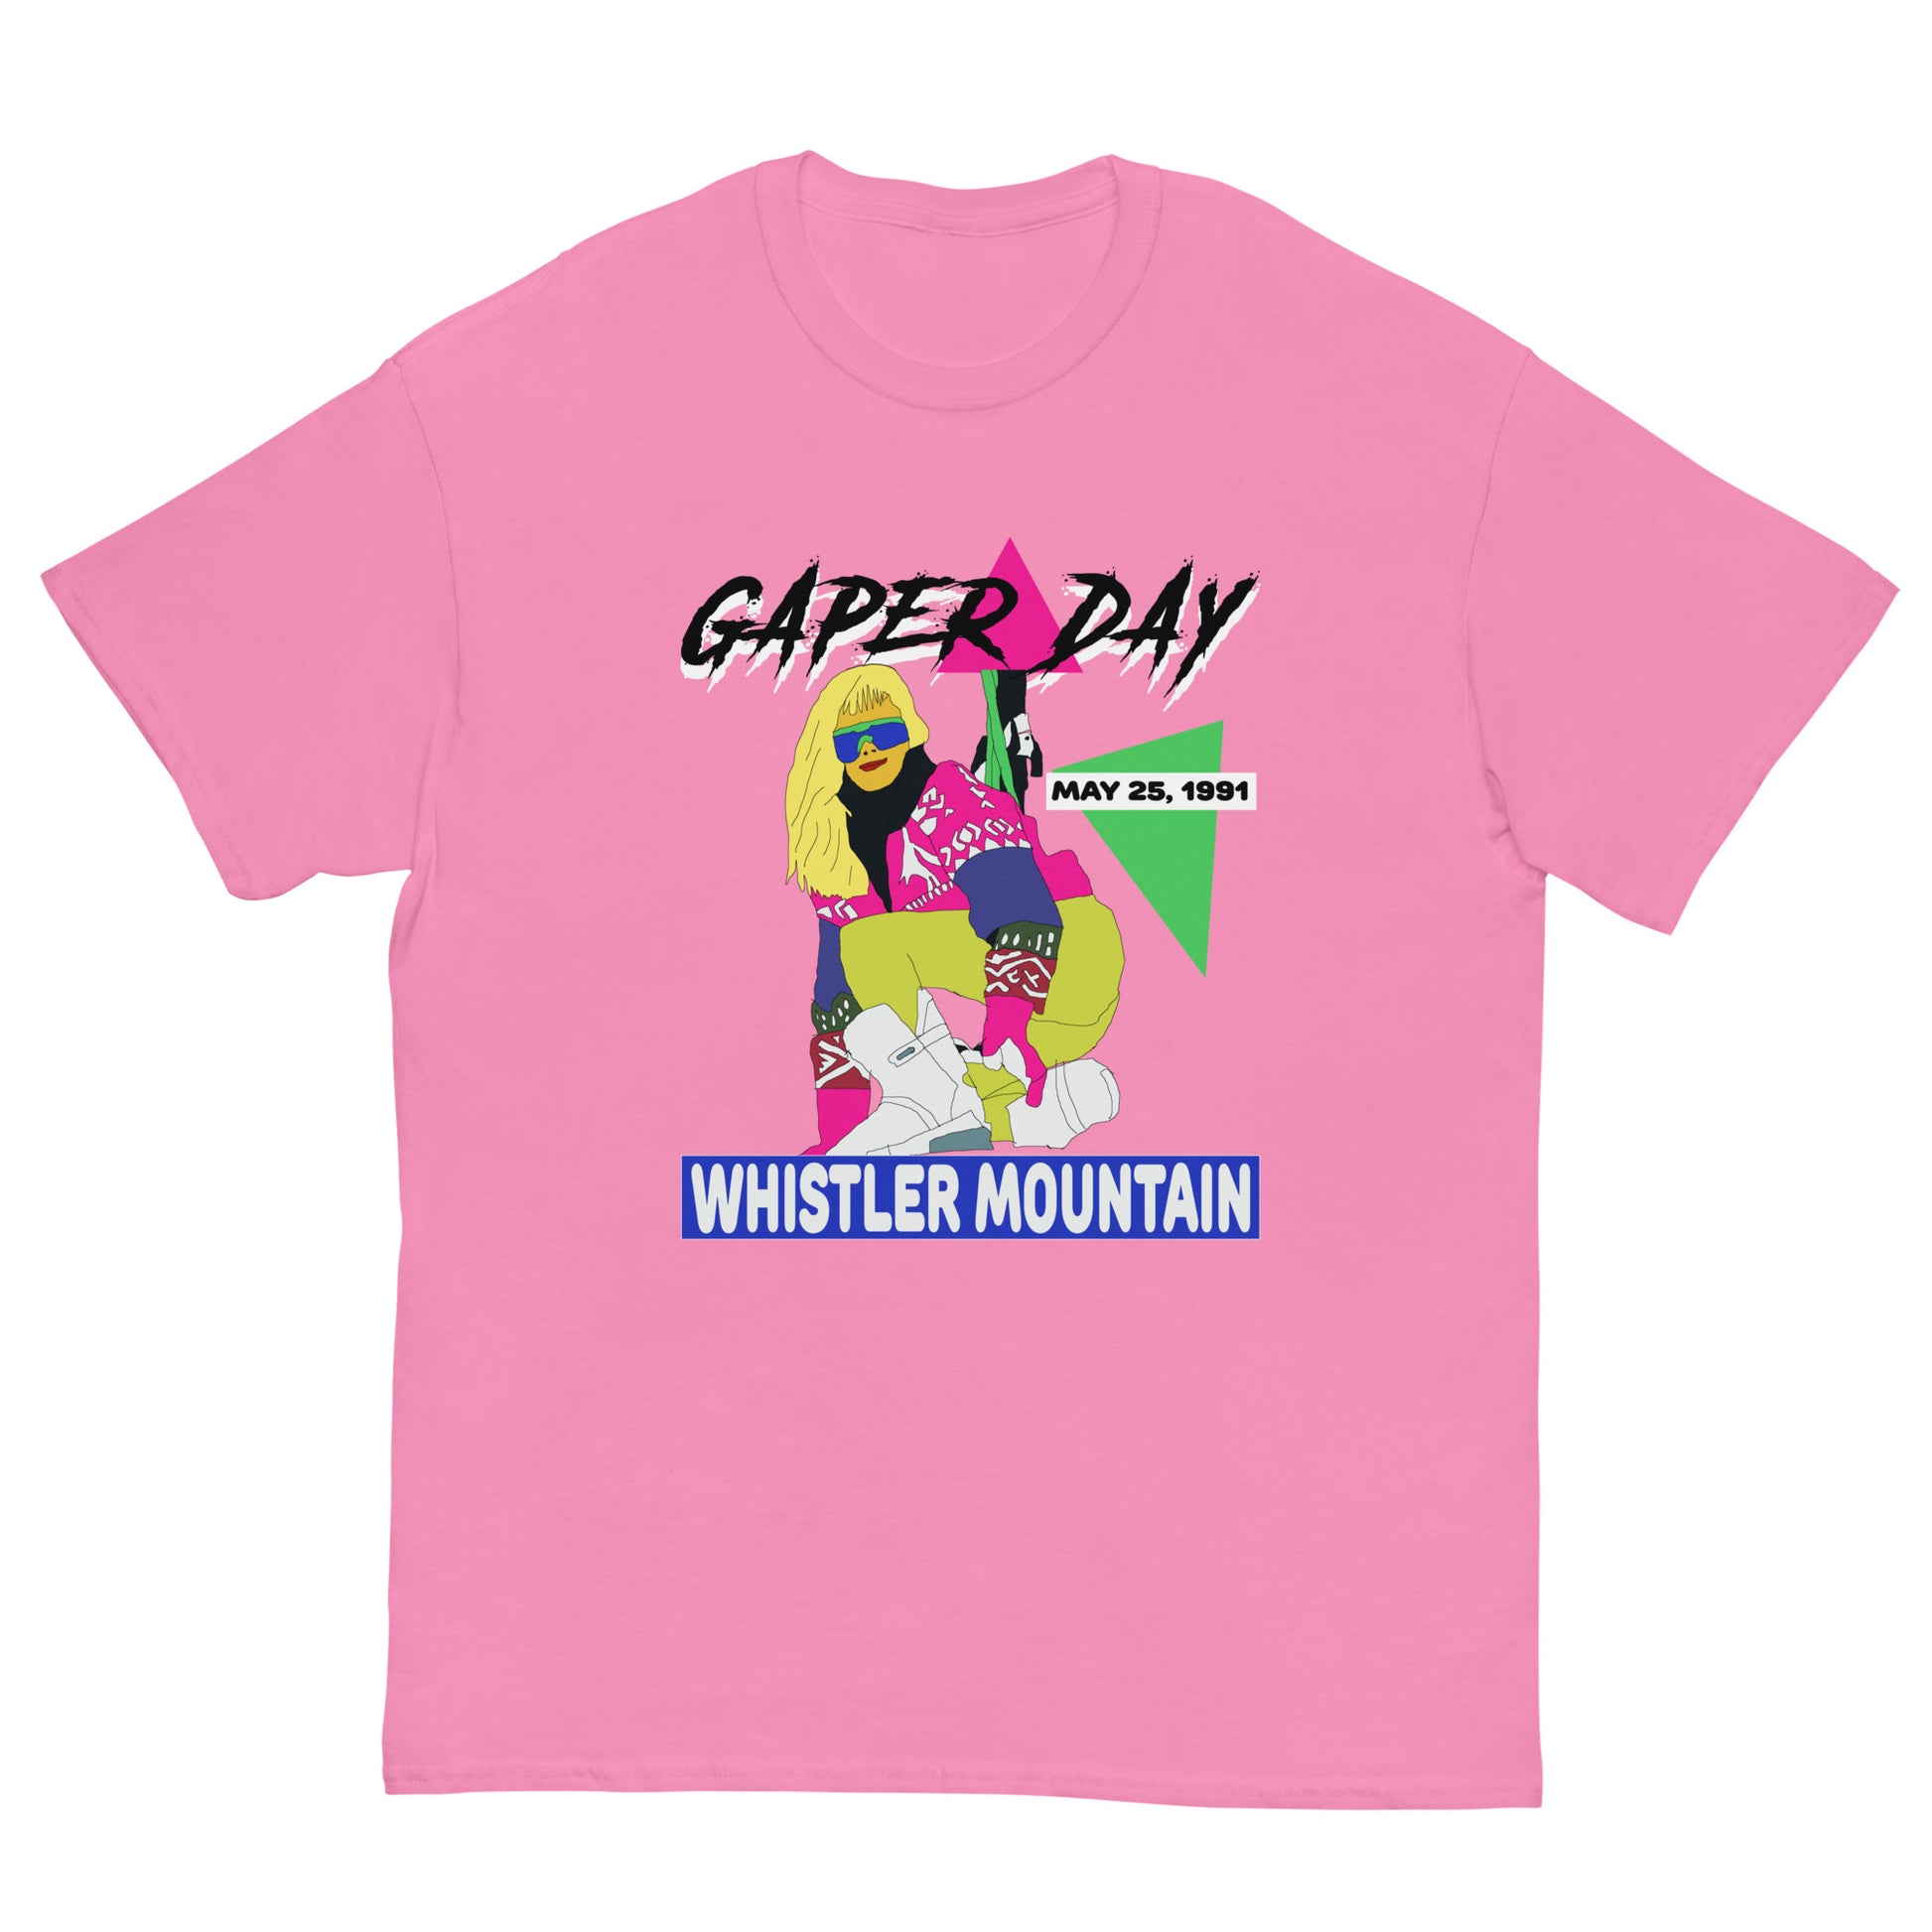 Gaper day 1991 Whistler mountain printed t-shirt